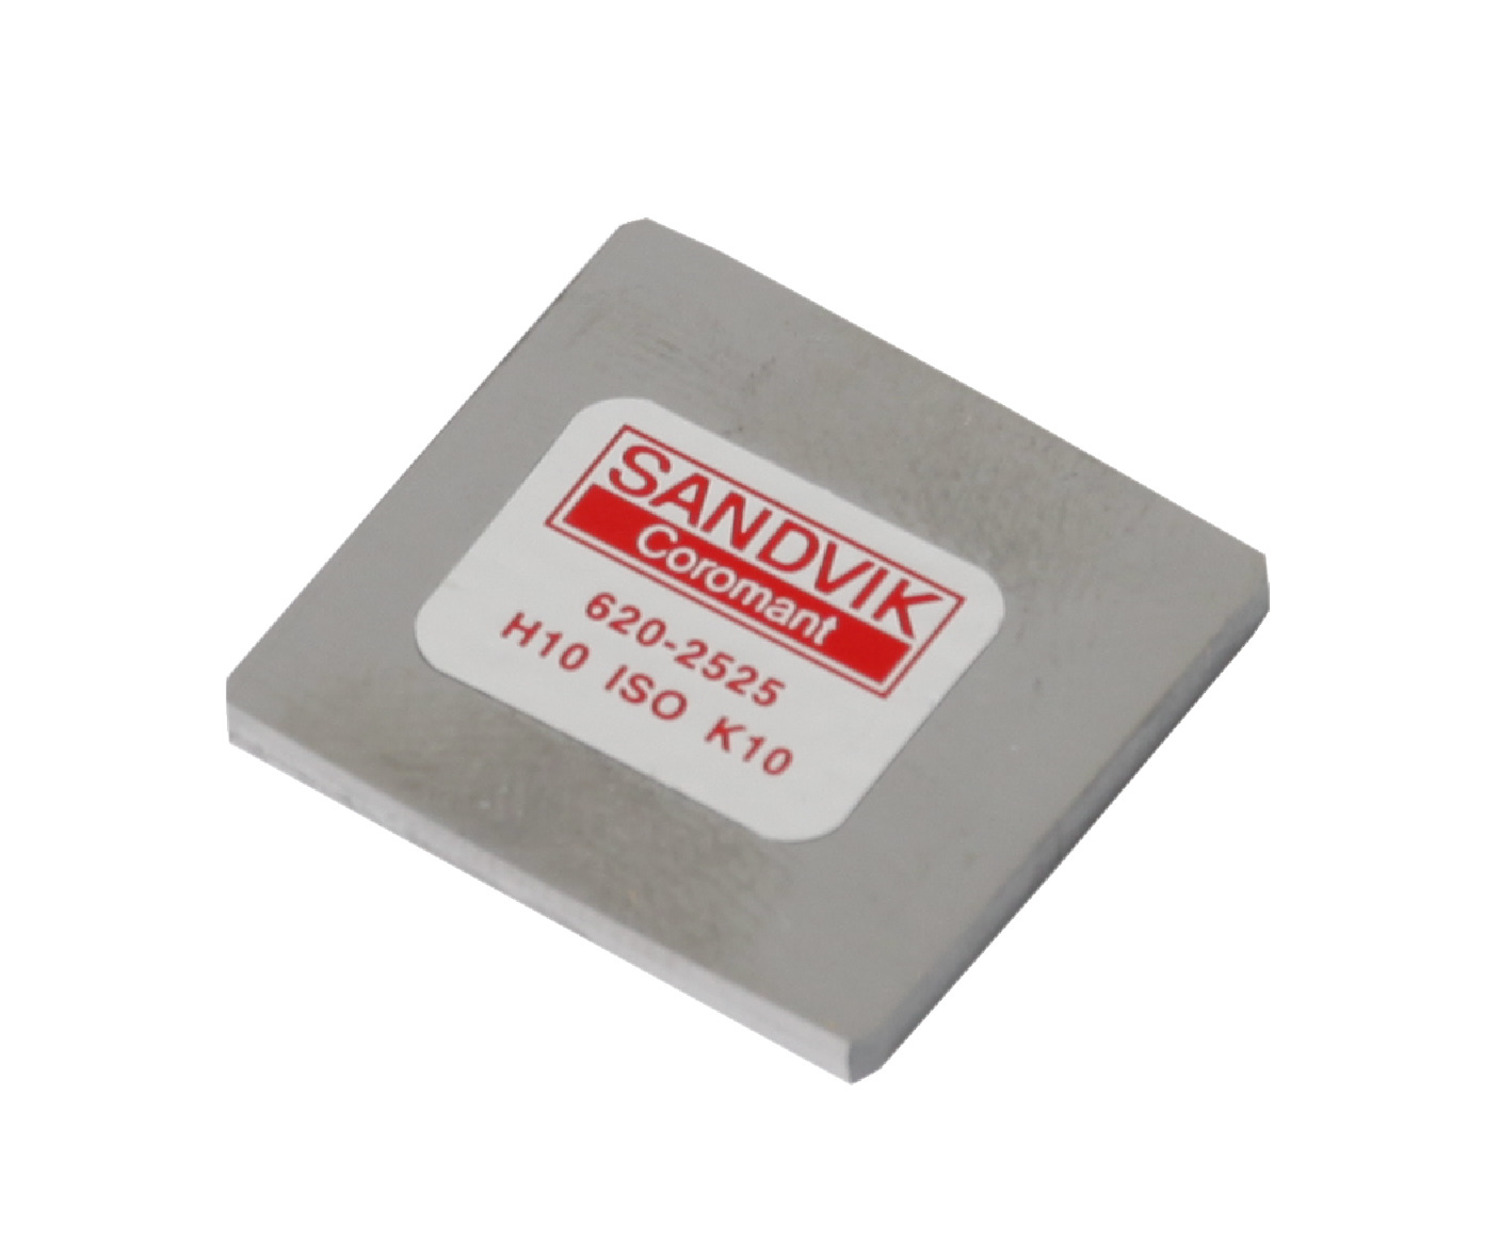 Sandvik Coromant Insert Scraper 620-2525 H10